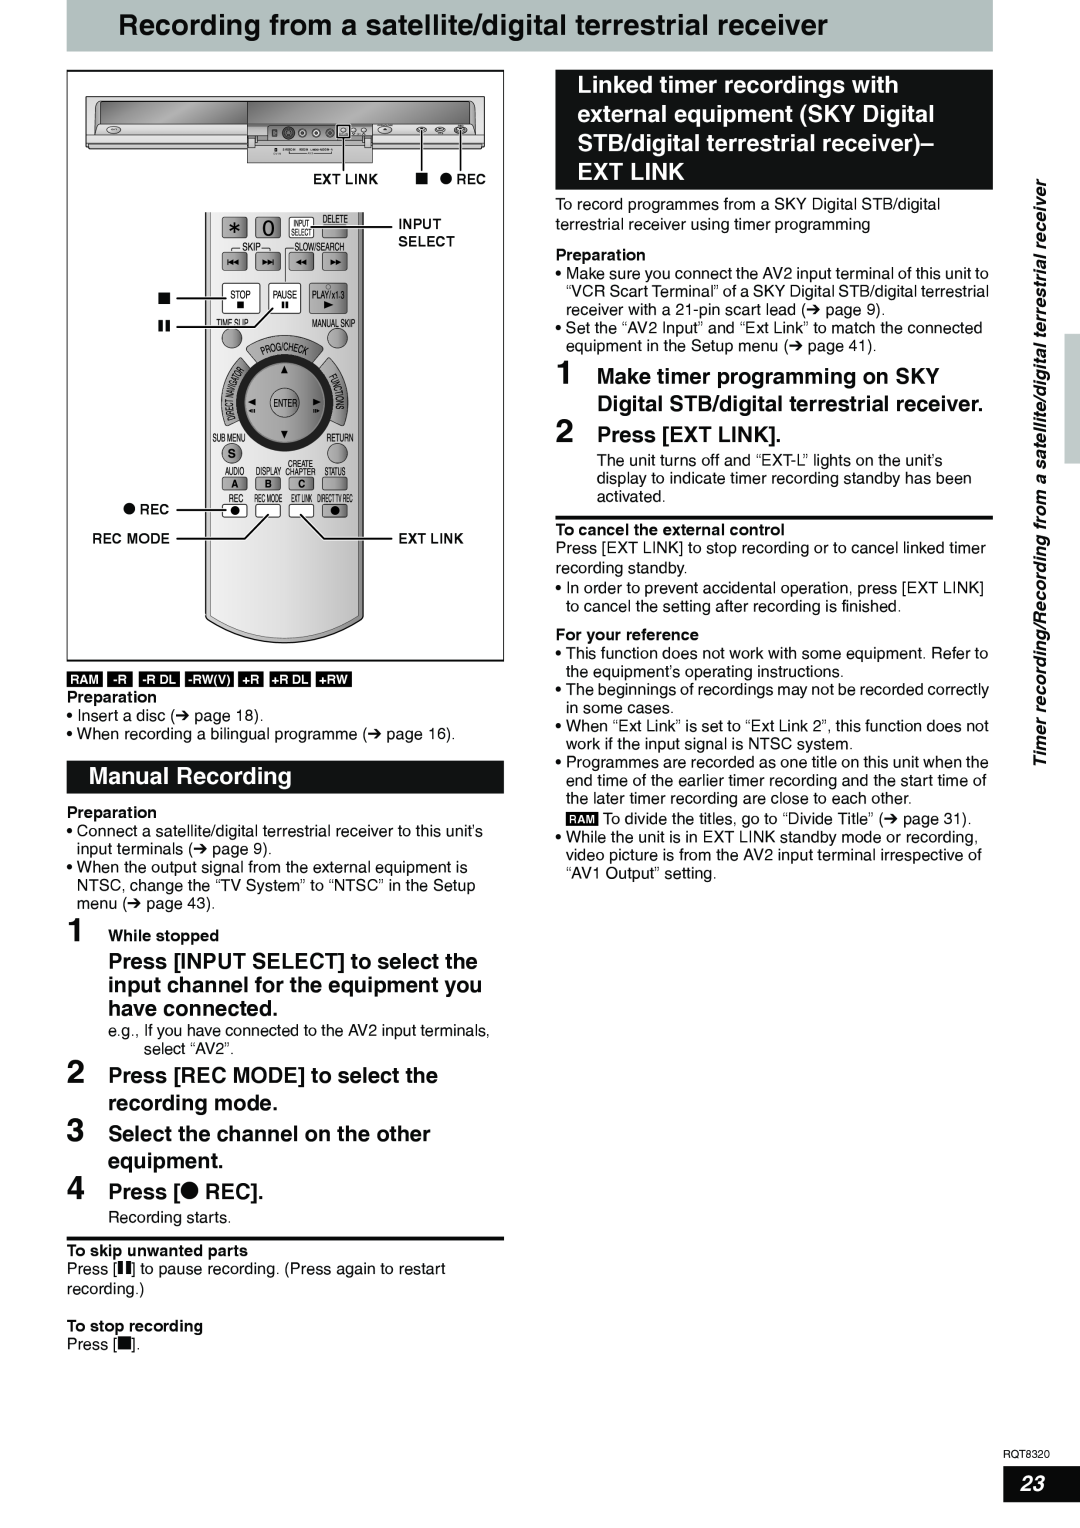 Panasonic DMR-ES15EB Recording from a satellite/digital terrestrial receiver, Manual Recording, Ext Link, Press EXT LINK 